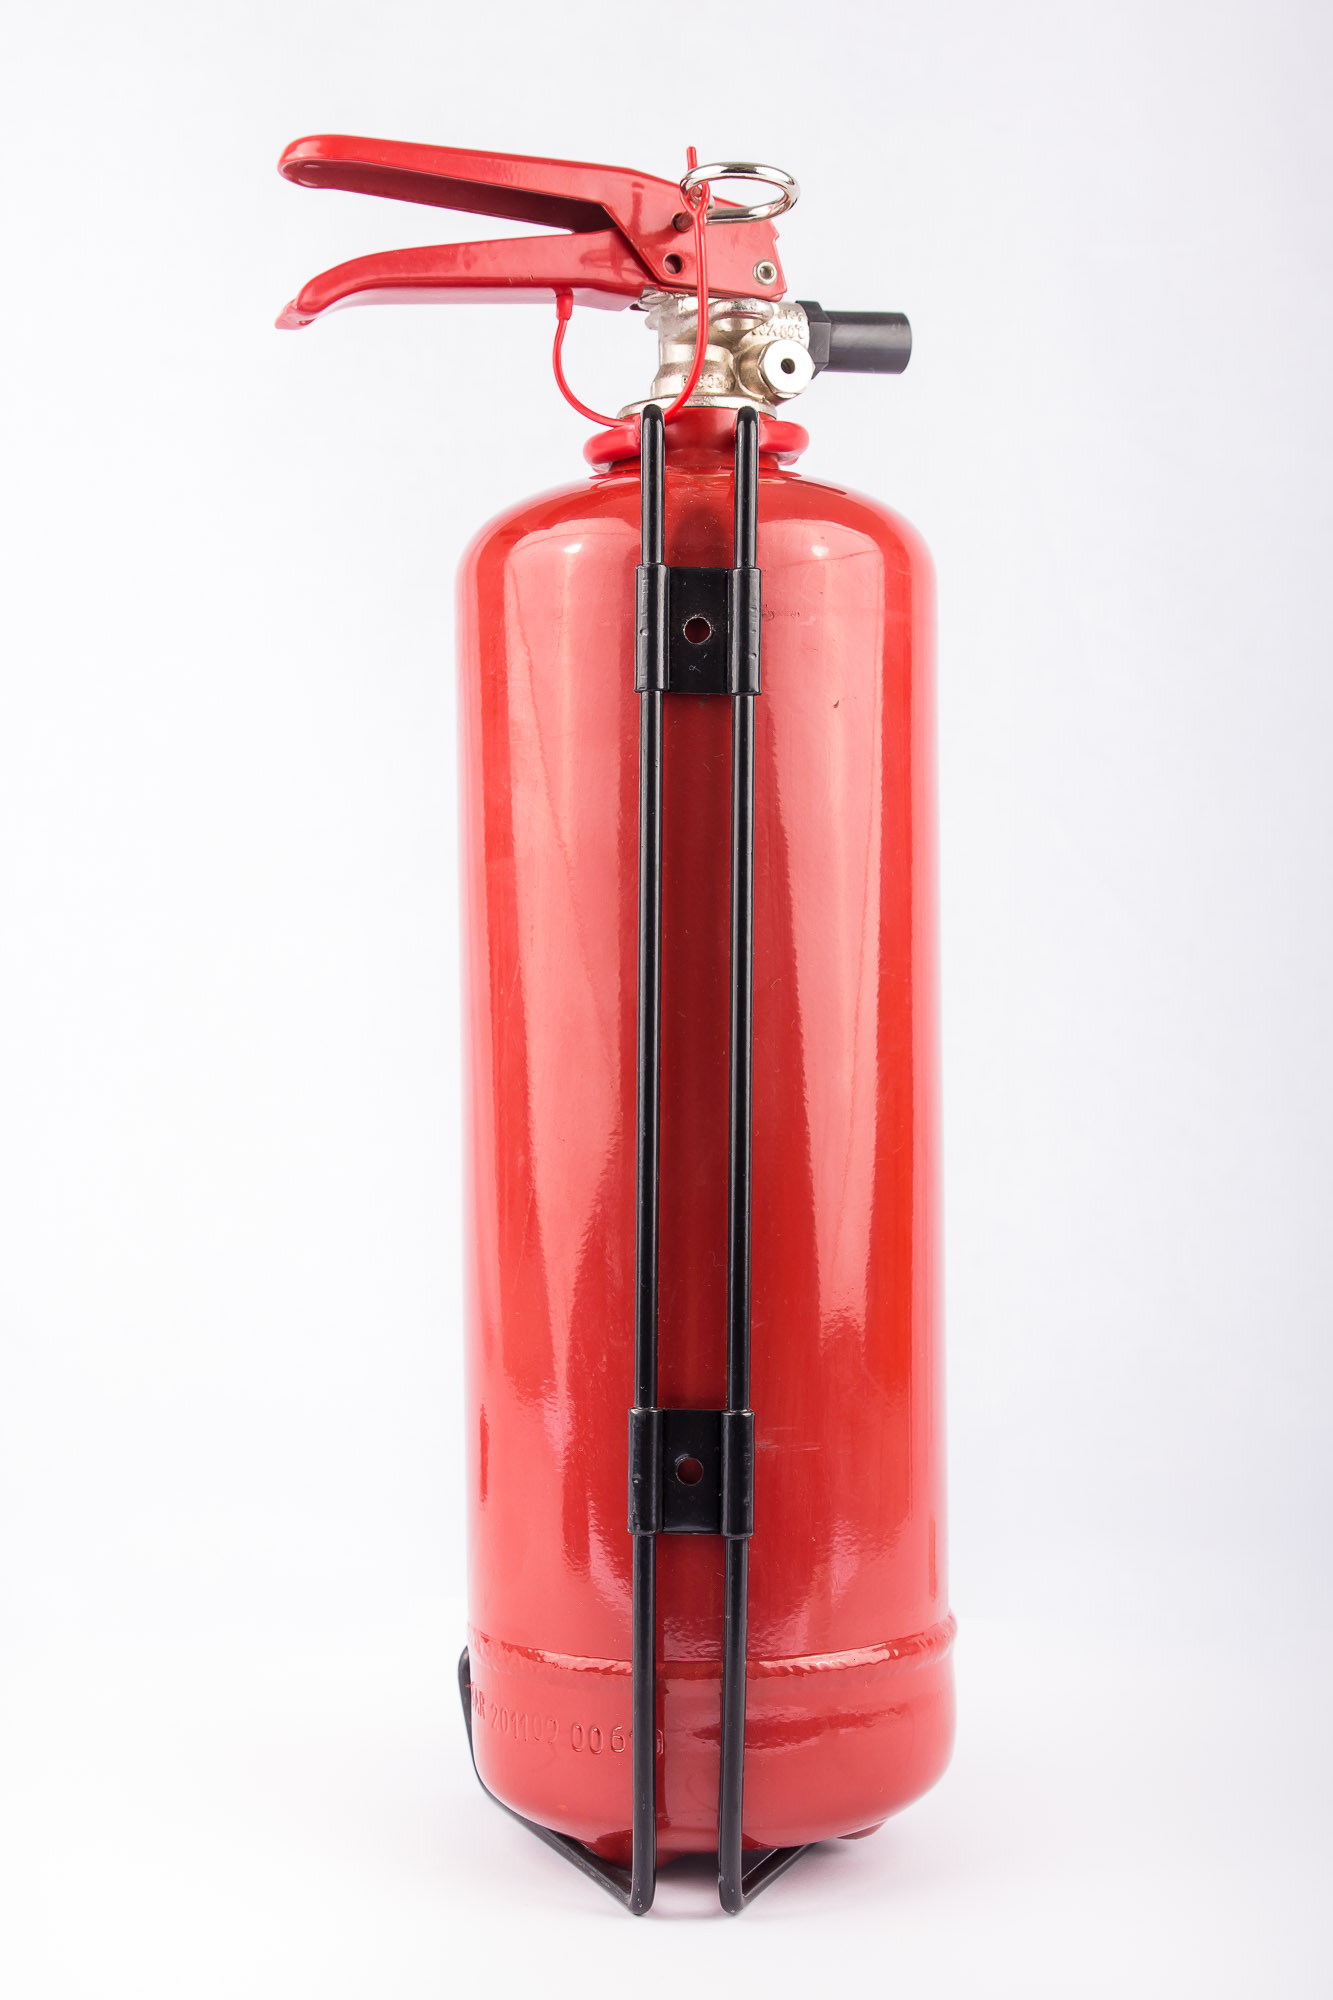 2 KG Dry Powder Fire Extinguisher